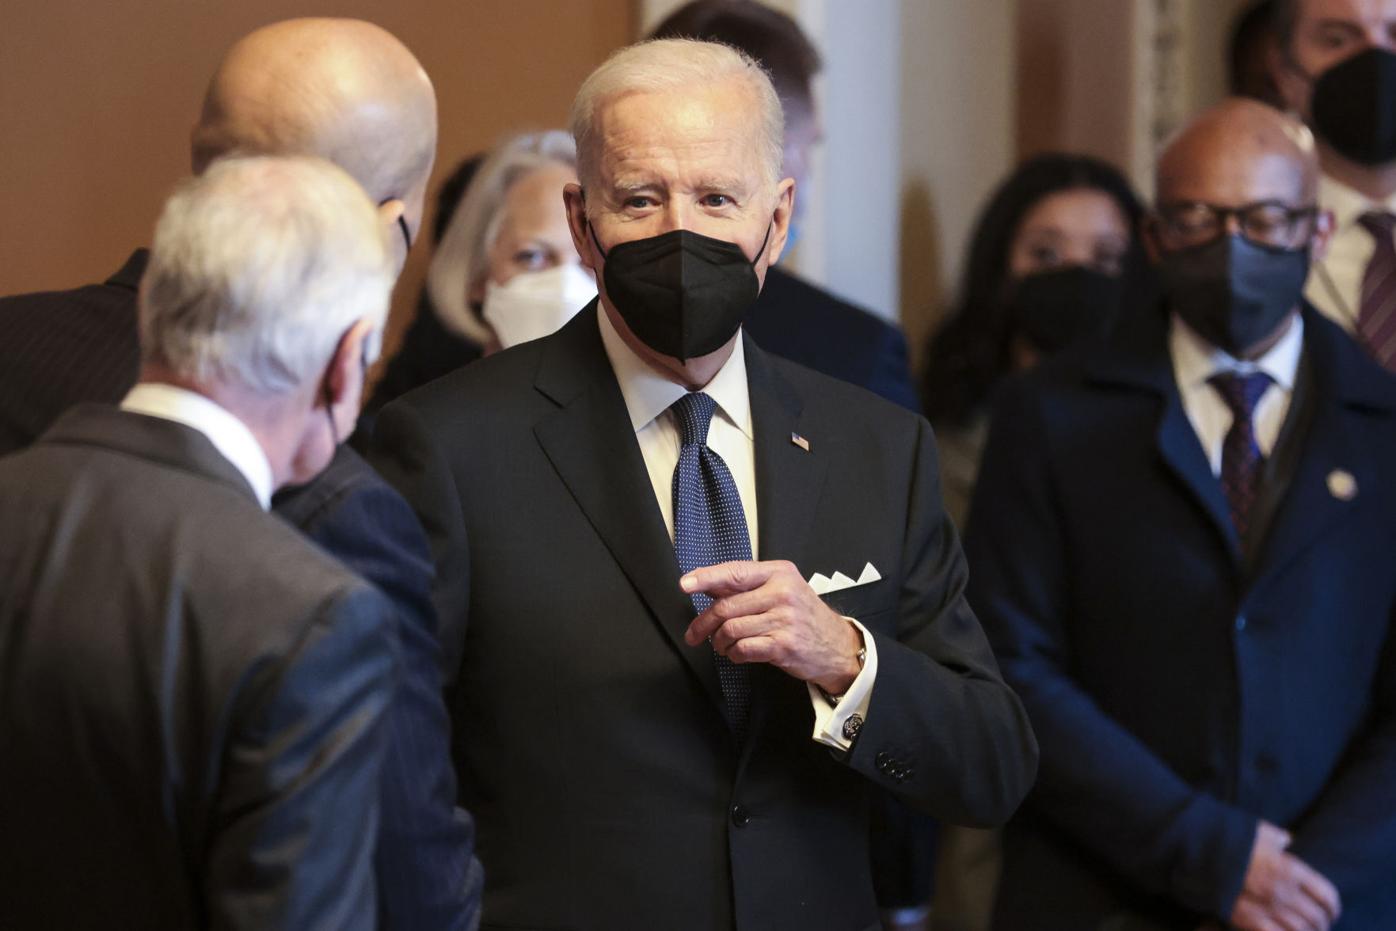 President Joe Biden speaks while greeting Senate pages